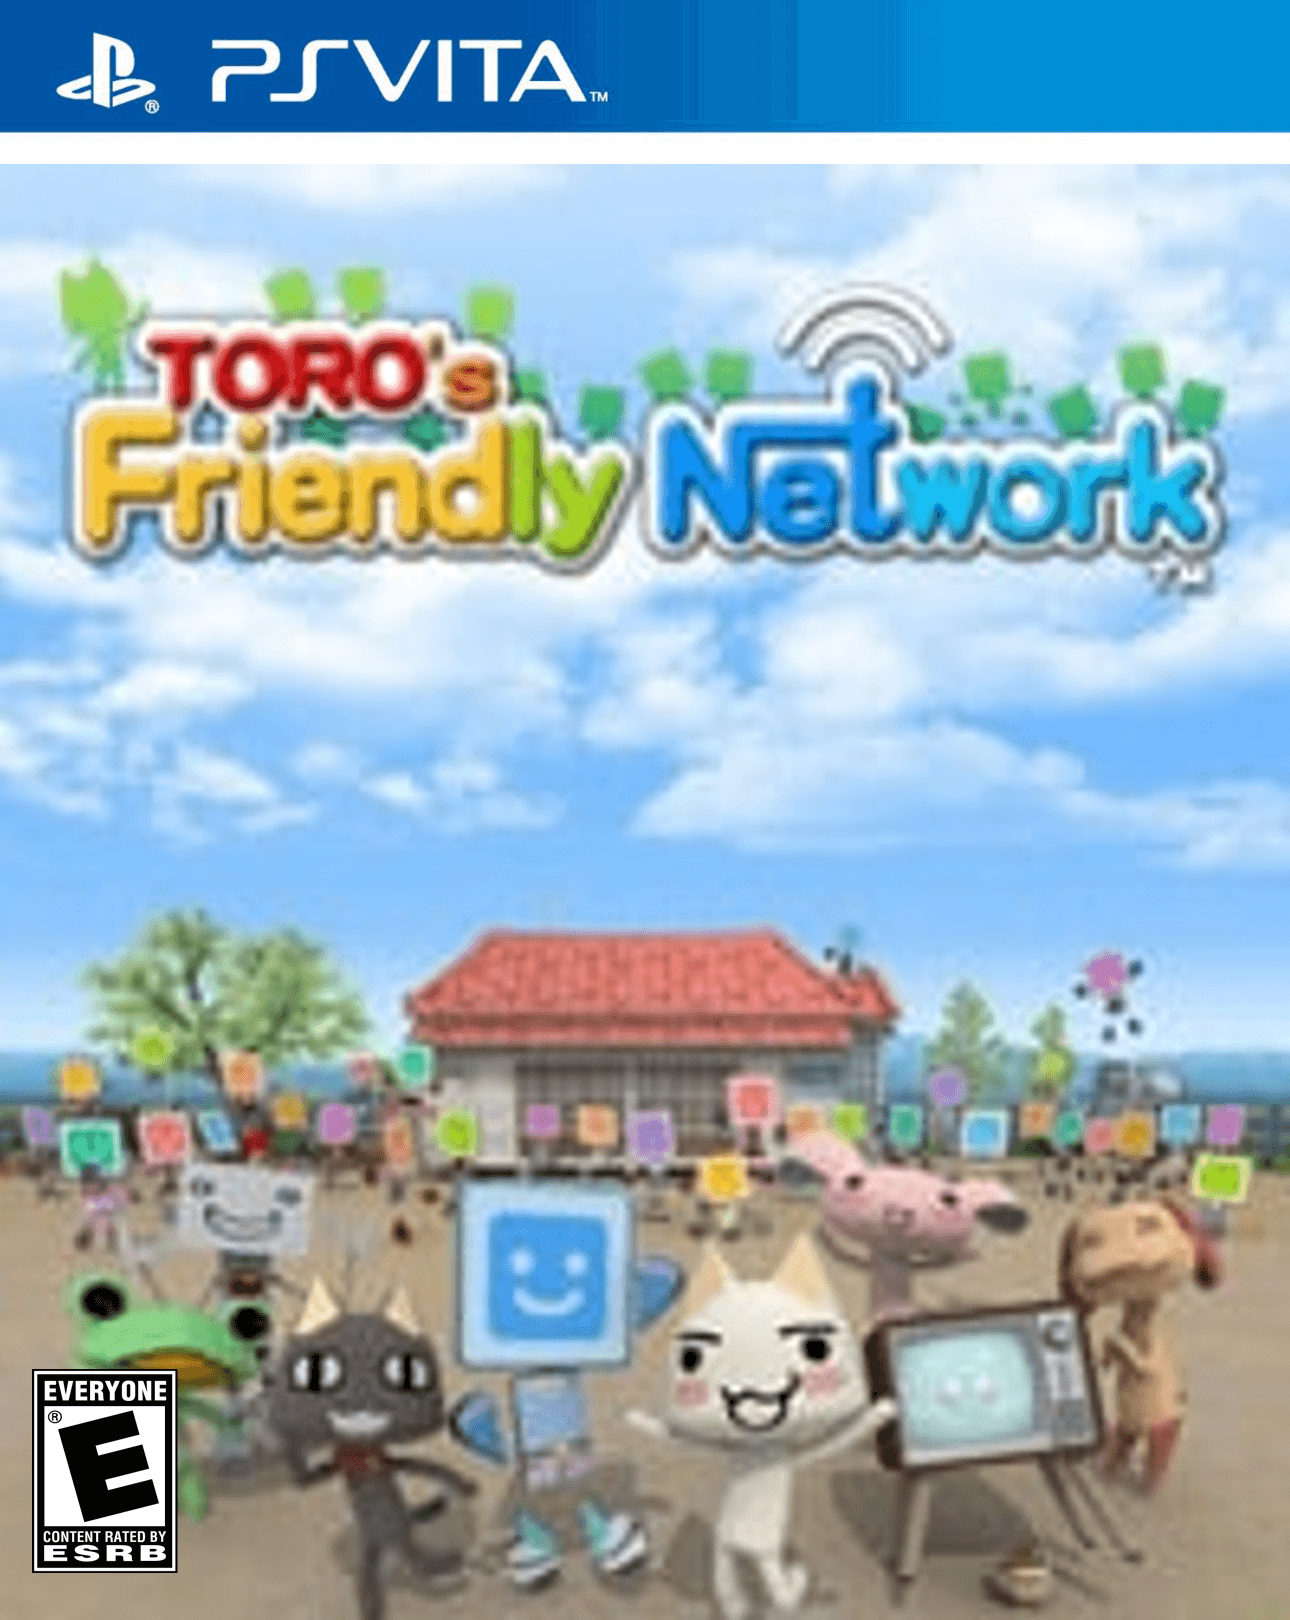 Toro’s Friend Network